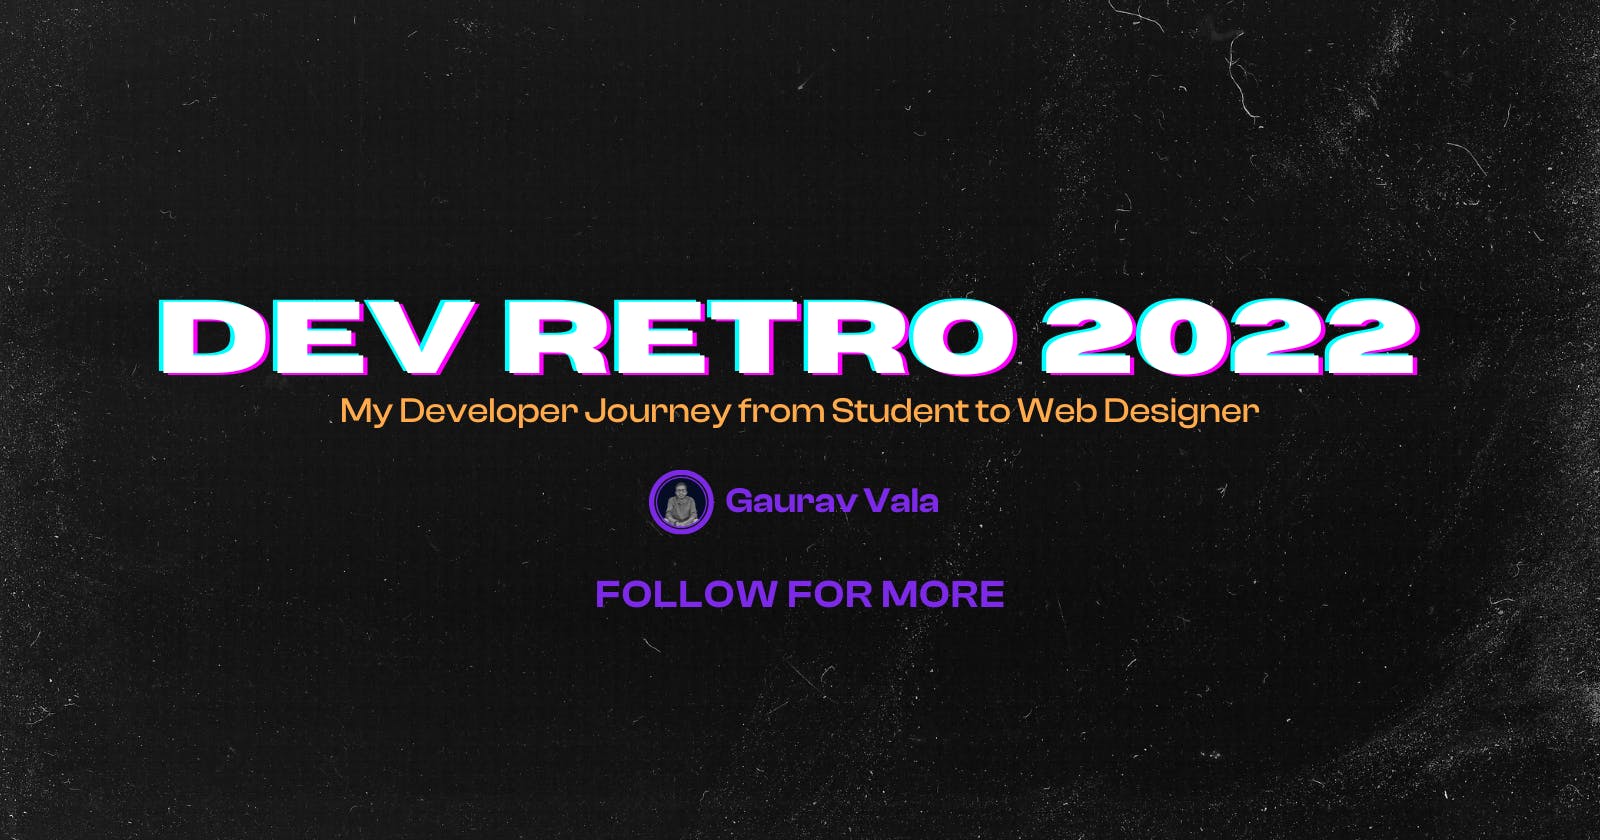 Dev Retro 2022: My Journey from Student to Web Designer